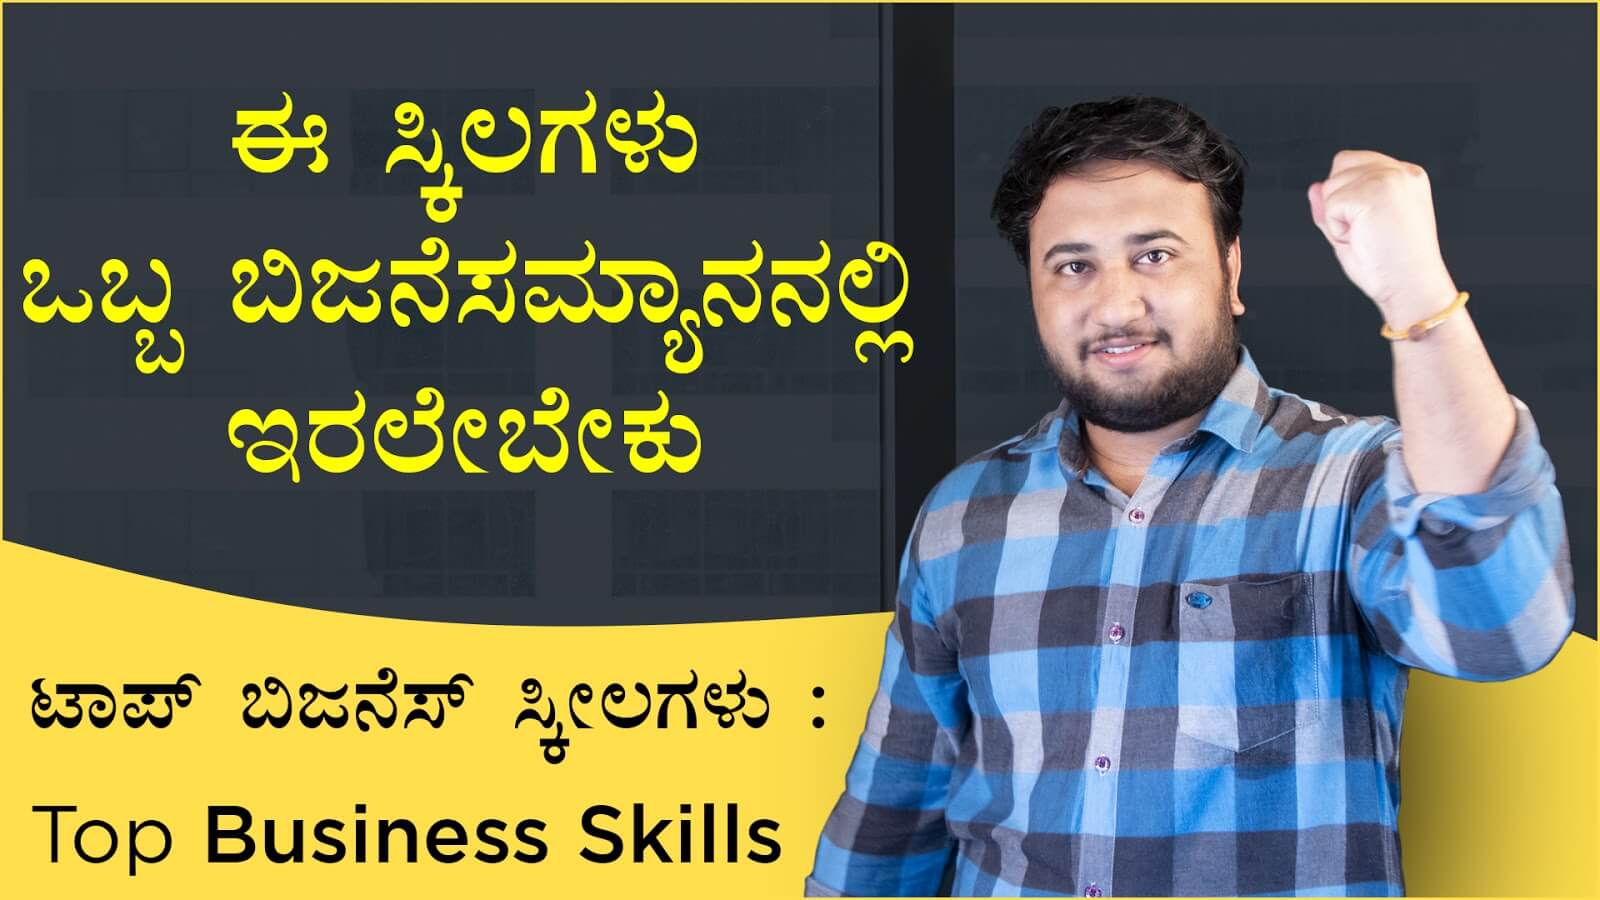 You are currently viewing ಈ ಸ್ಕಿಲಗಳು ಒಬ್ಬ ಬಿಜನೆಸಮ್ಯಾನನಲ್ಲಿ ಇರಲೇಬೇಕು – ಟಾಪ್ ಬಿಜನೆಸ್ ಸ್ಕೀಲಗಳು : Top Business Skills in Kannada